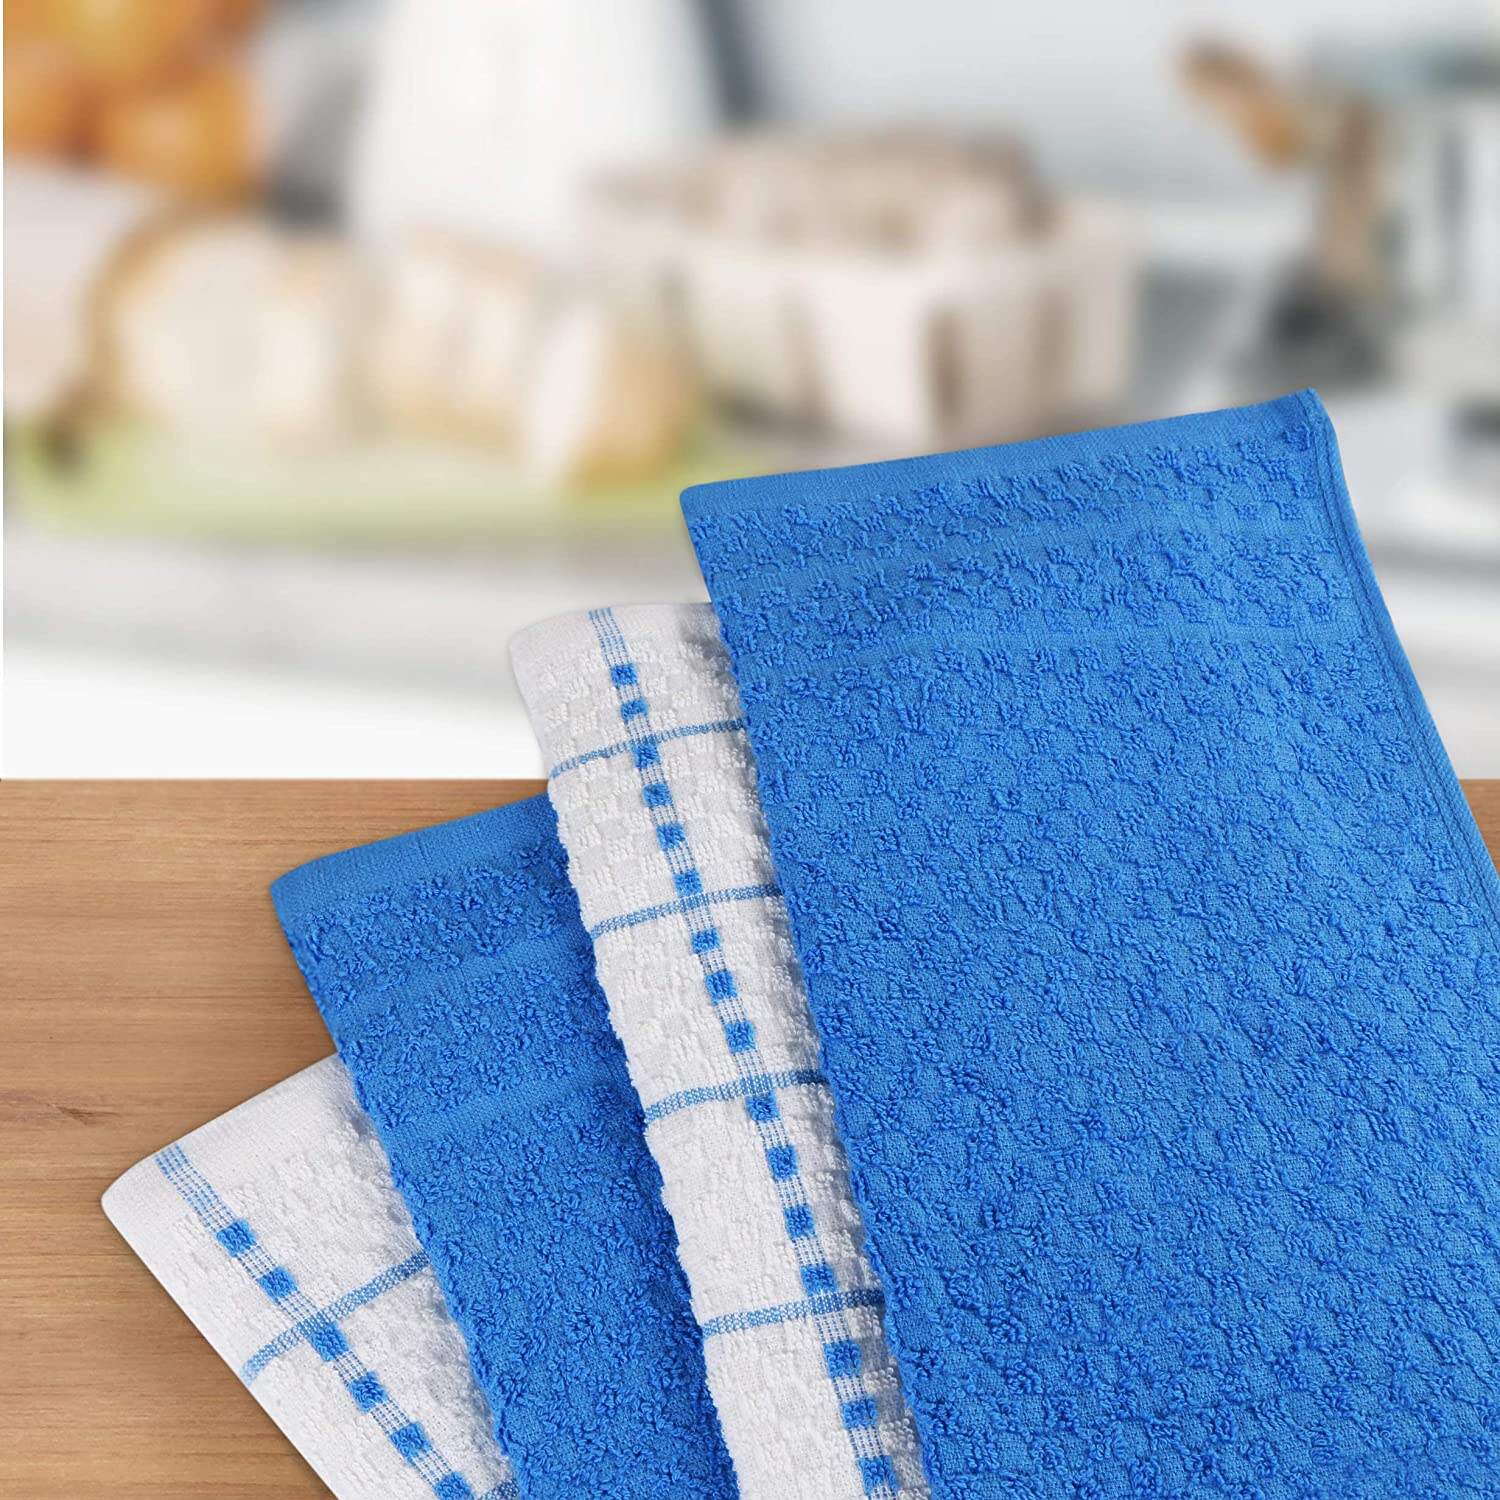 Dish Towels 12 White Cotton Blue Striped 15 x 25 Kitchen Tea Towels Bar  Towels